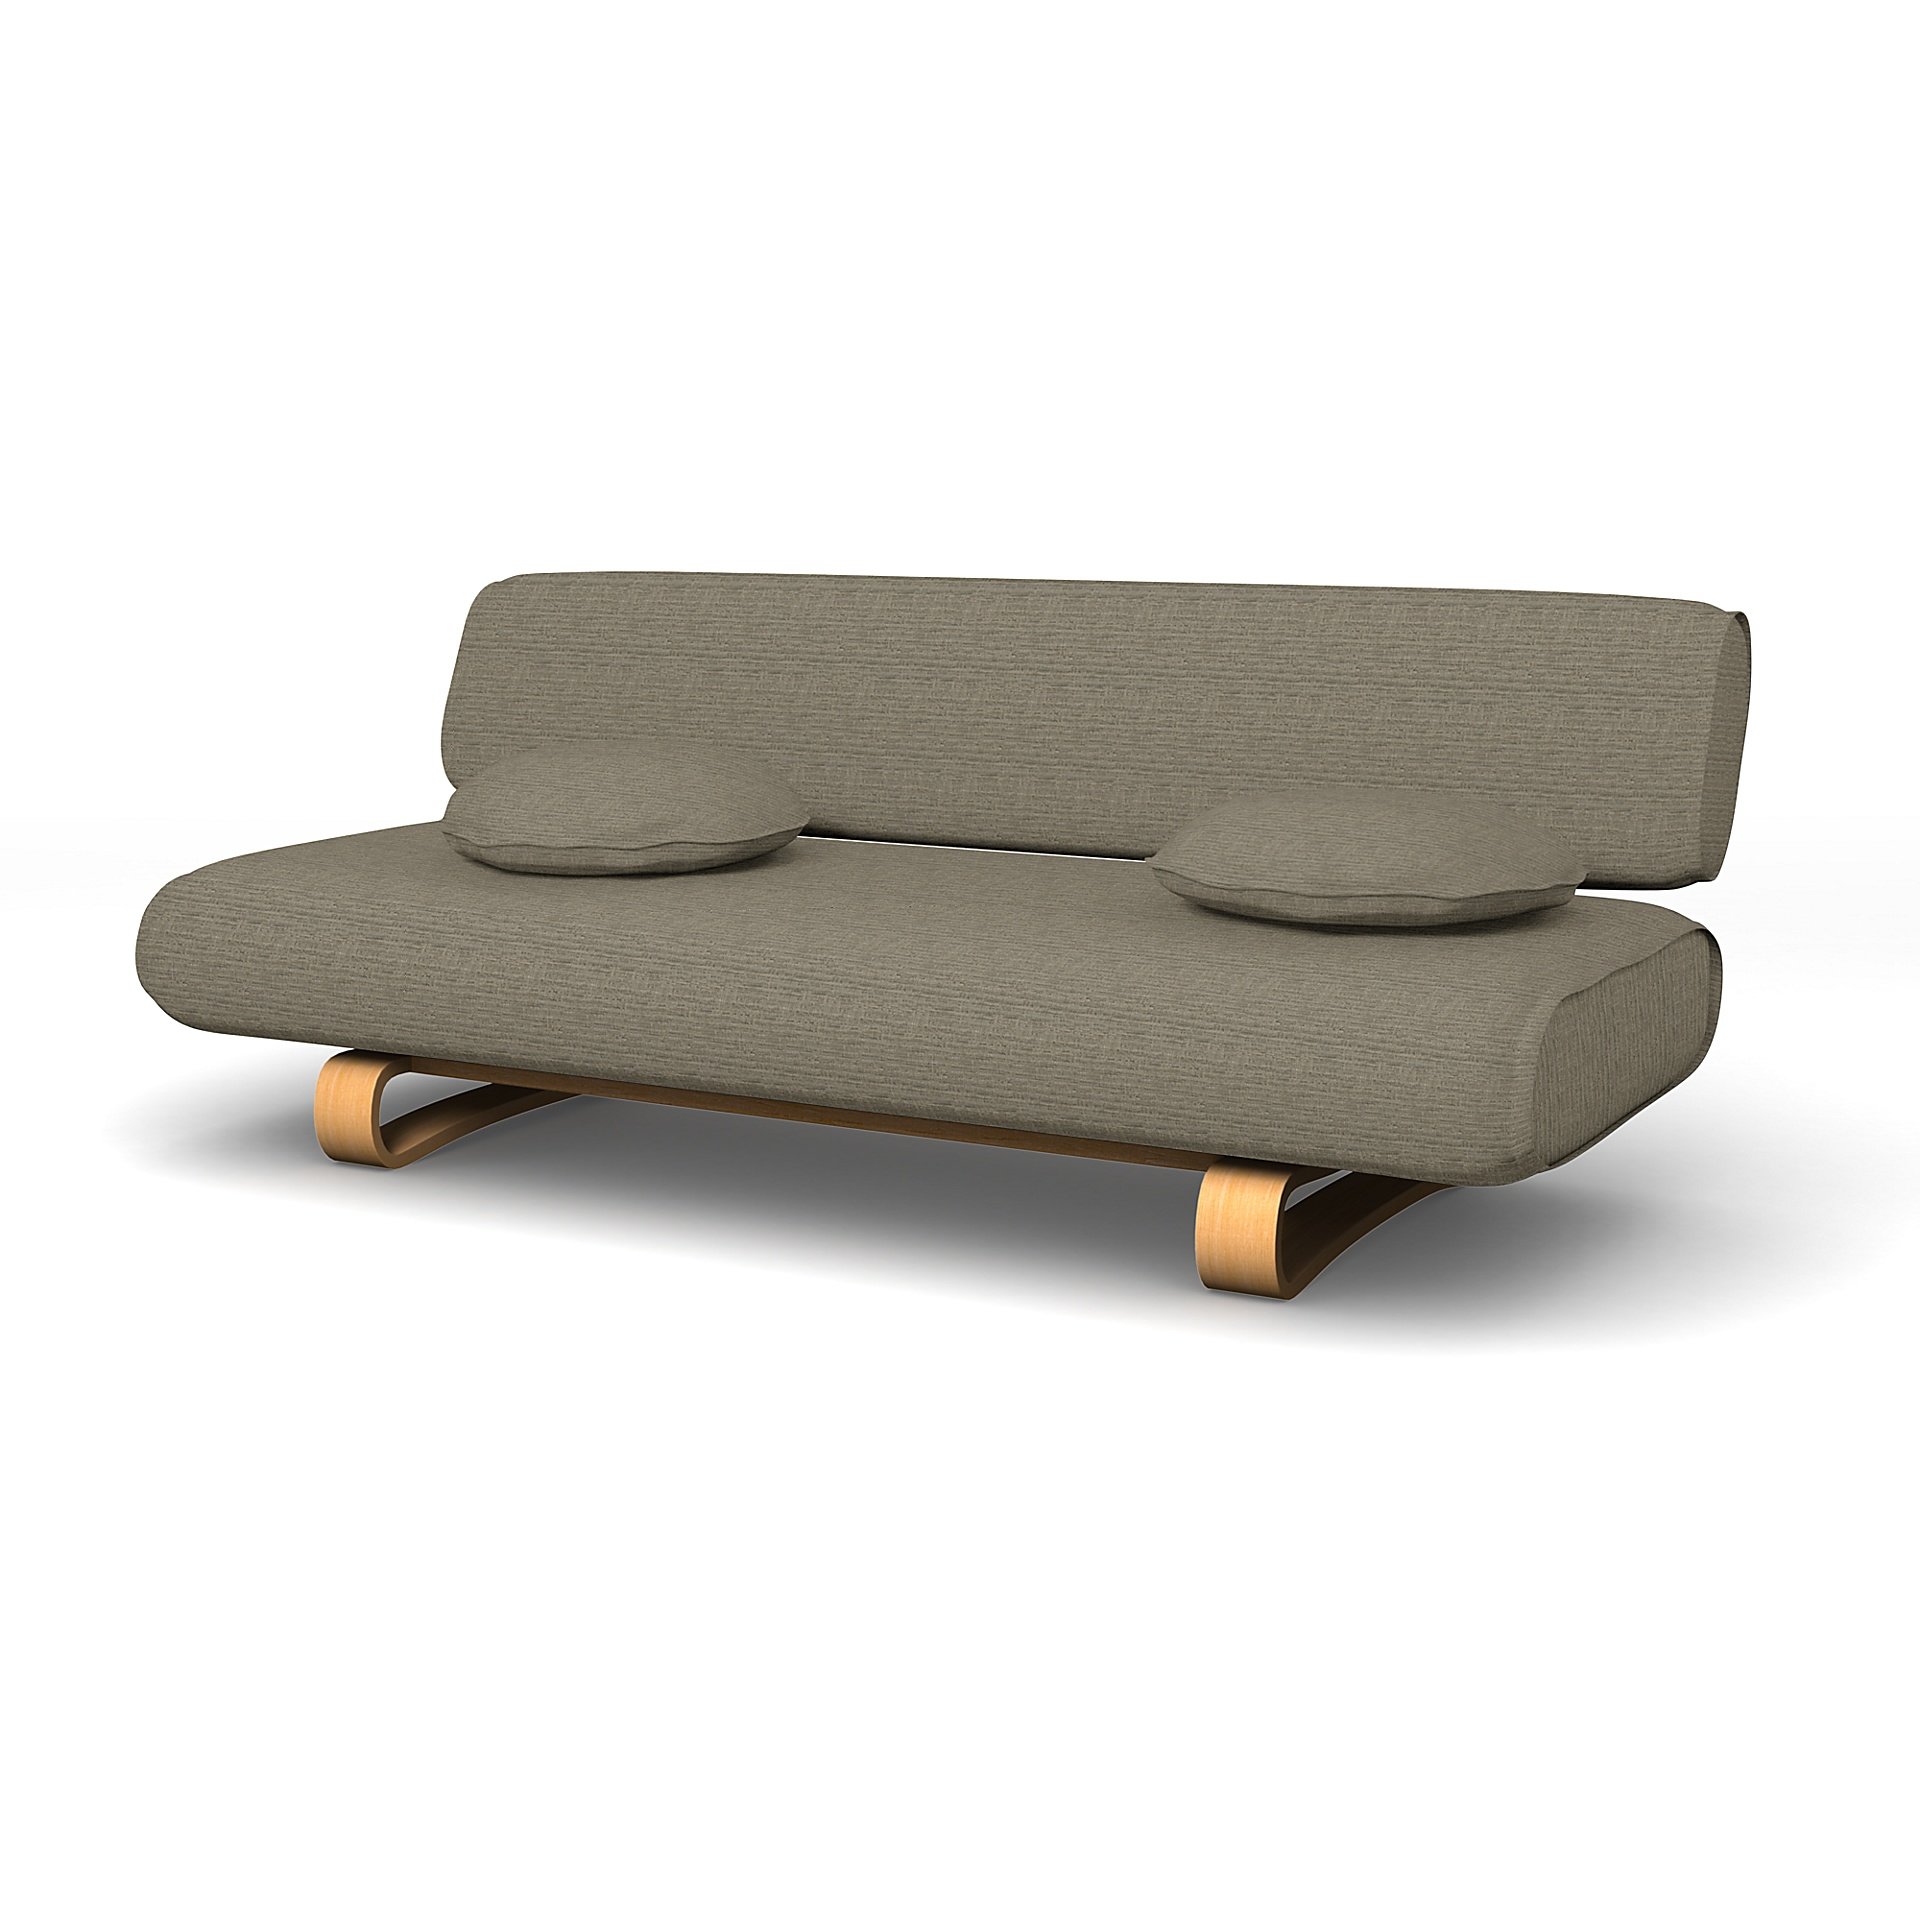 IKEA - Allerum Sofa Bed Cover, Mole Brown, Boucle & Texture - Bemz